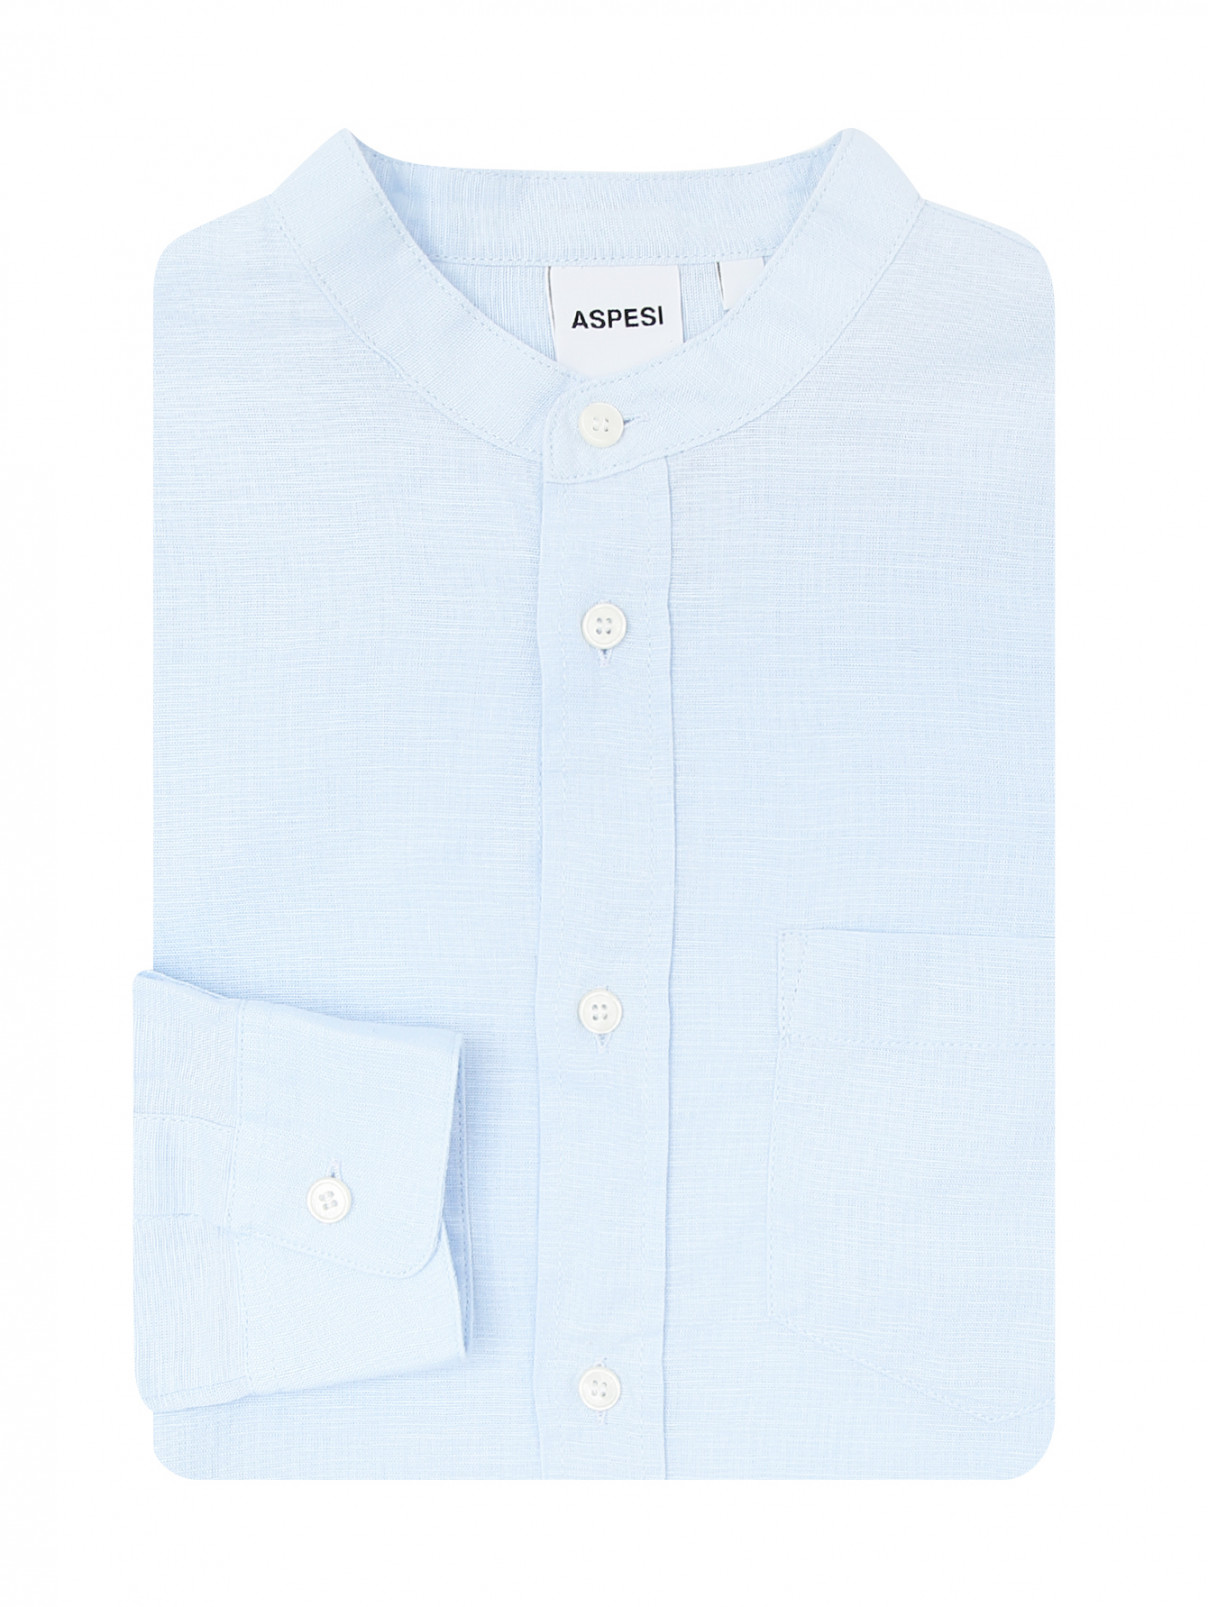 Однотонная рубашка с длинным рукавом Aspesi  –  Общий вид  – Цвет:  Синий